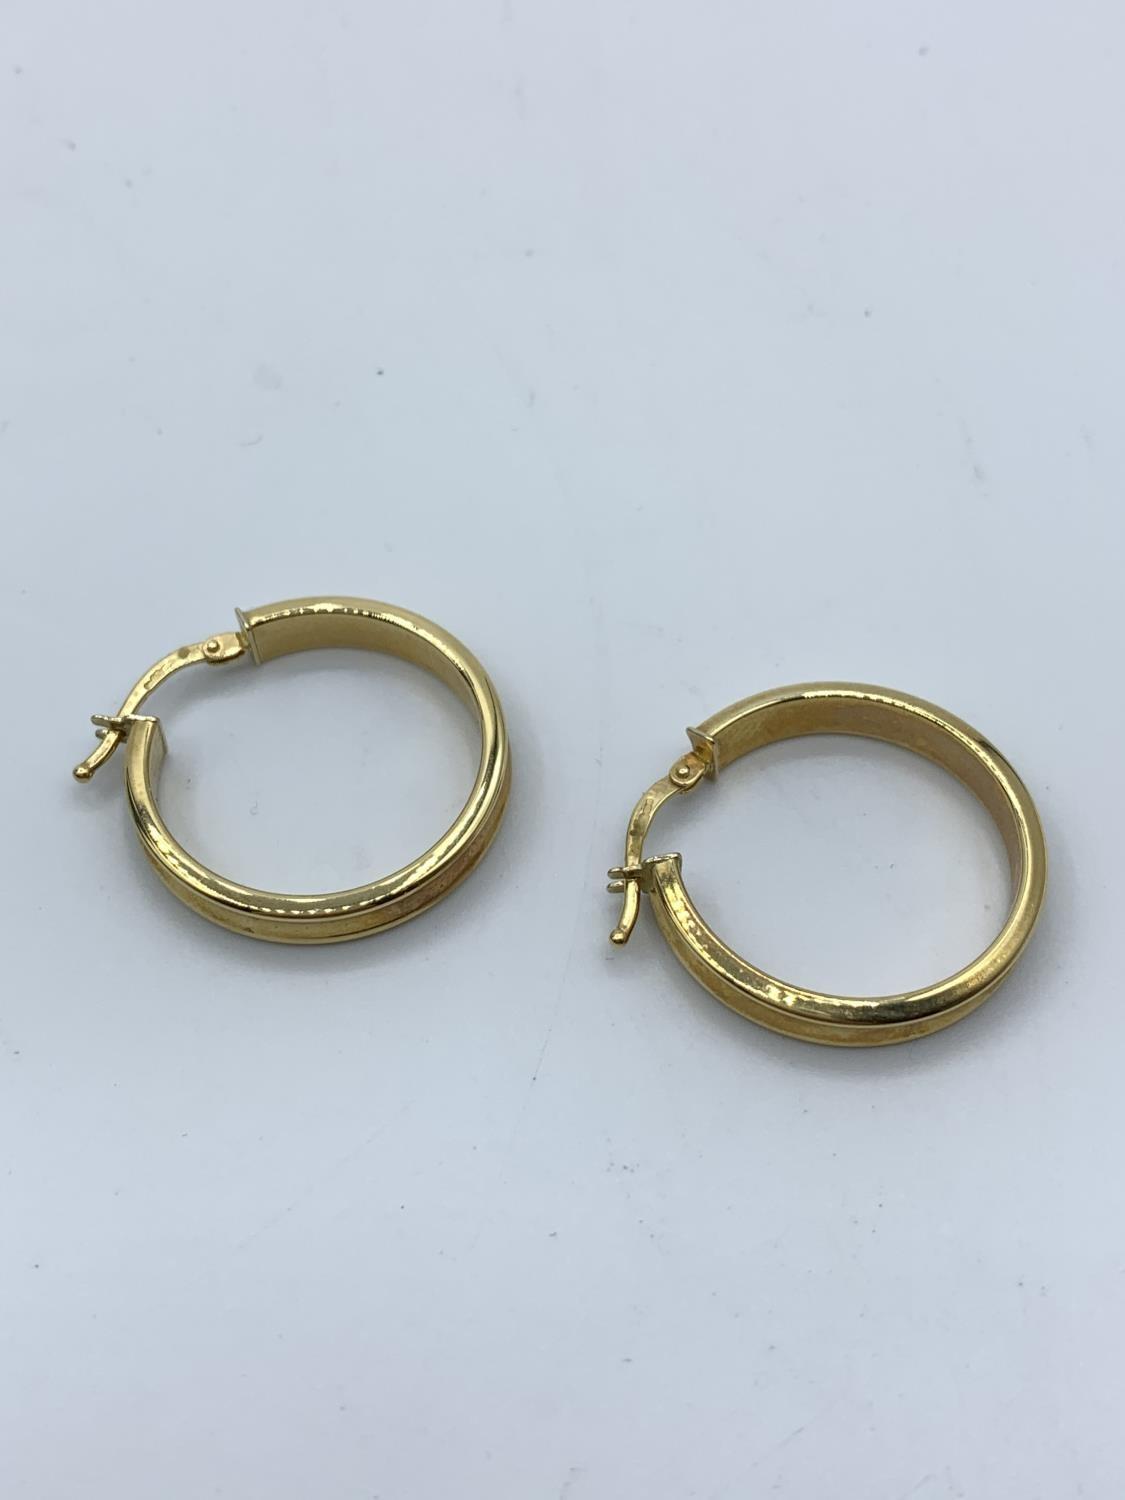 Pair of 18K Yellow Gold Hoop Earrings in original presentation box, weight 2.2g and 2cm diameter - Image 7 of 10